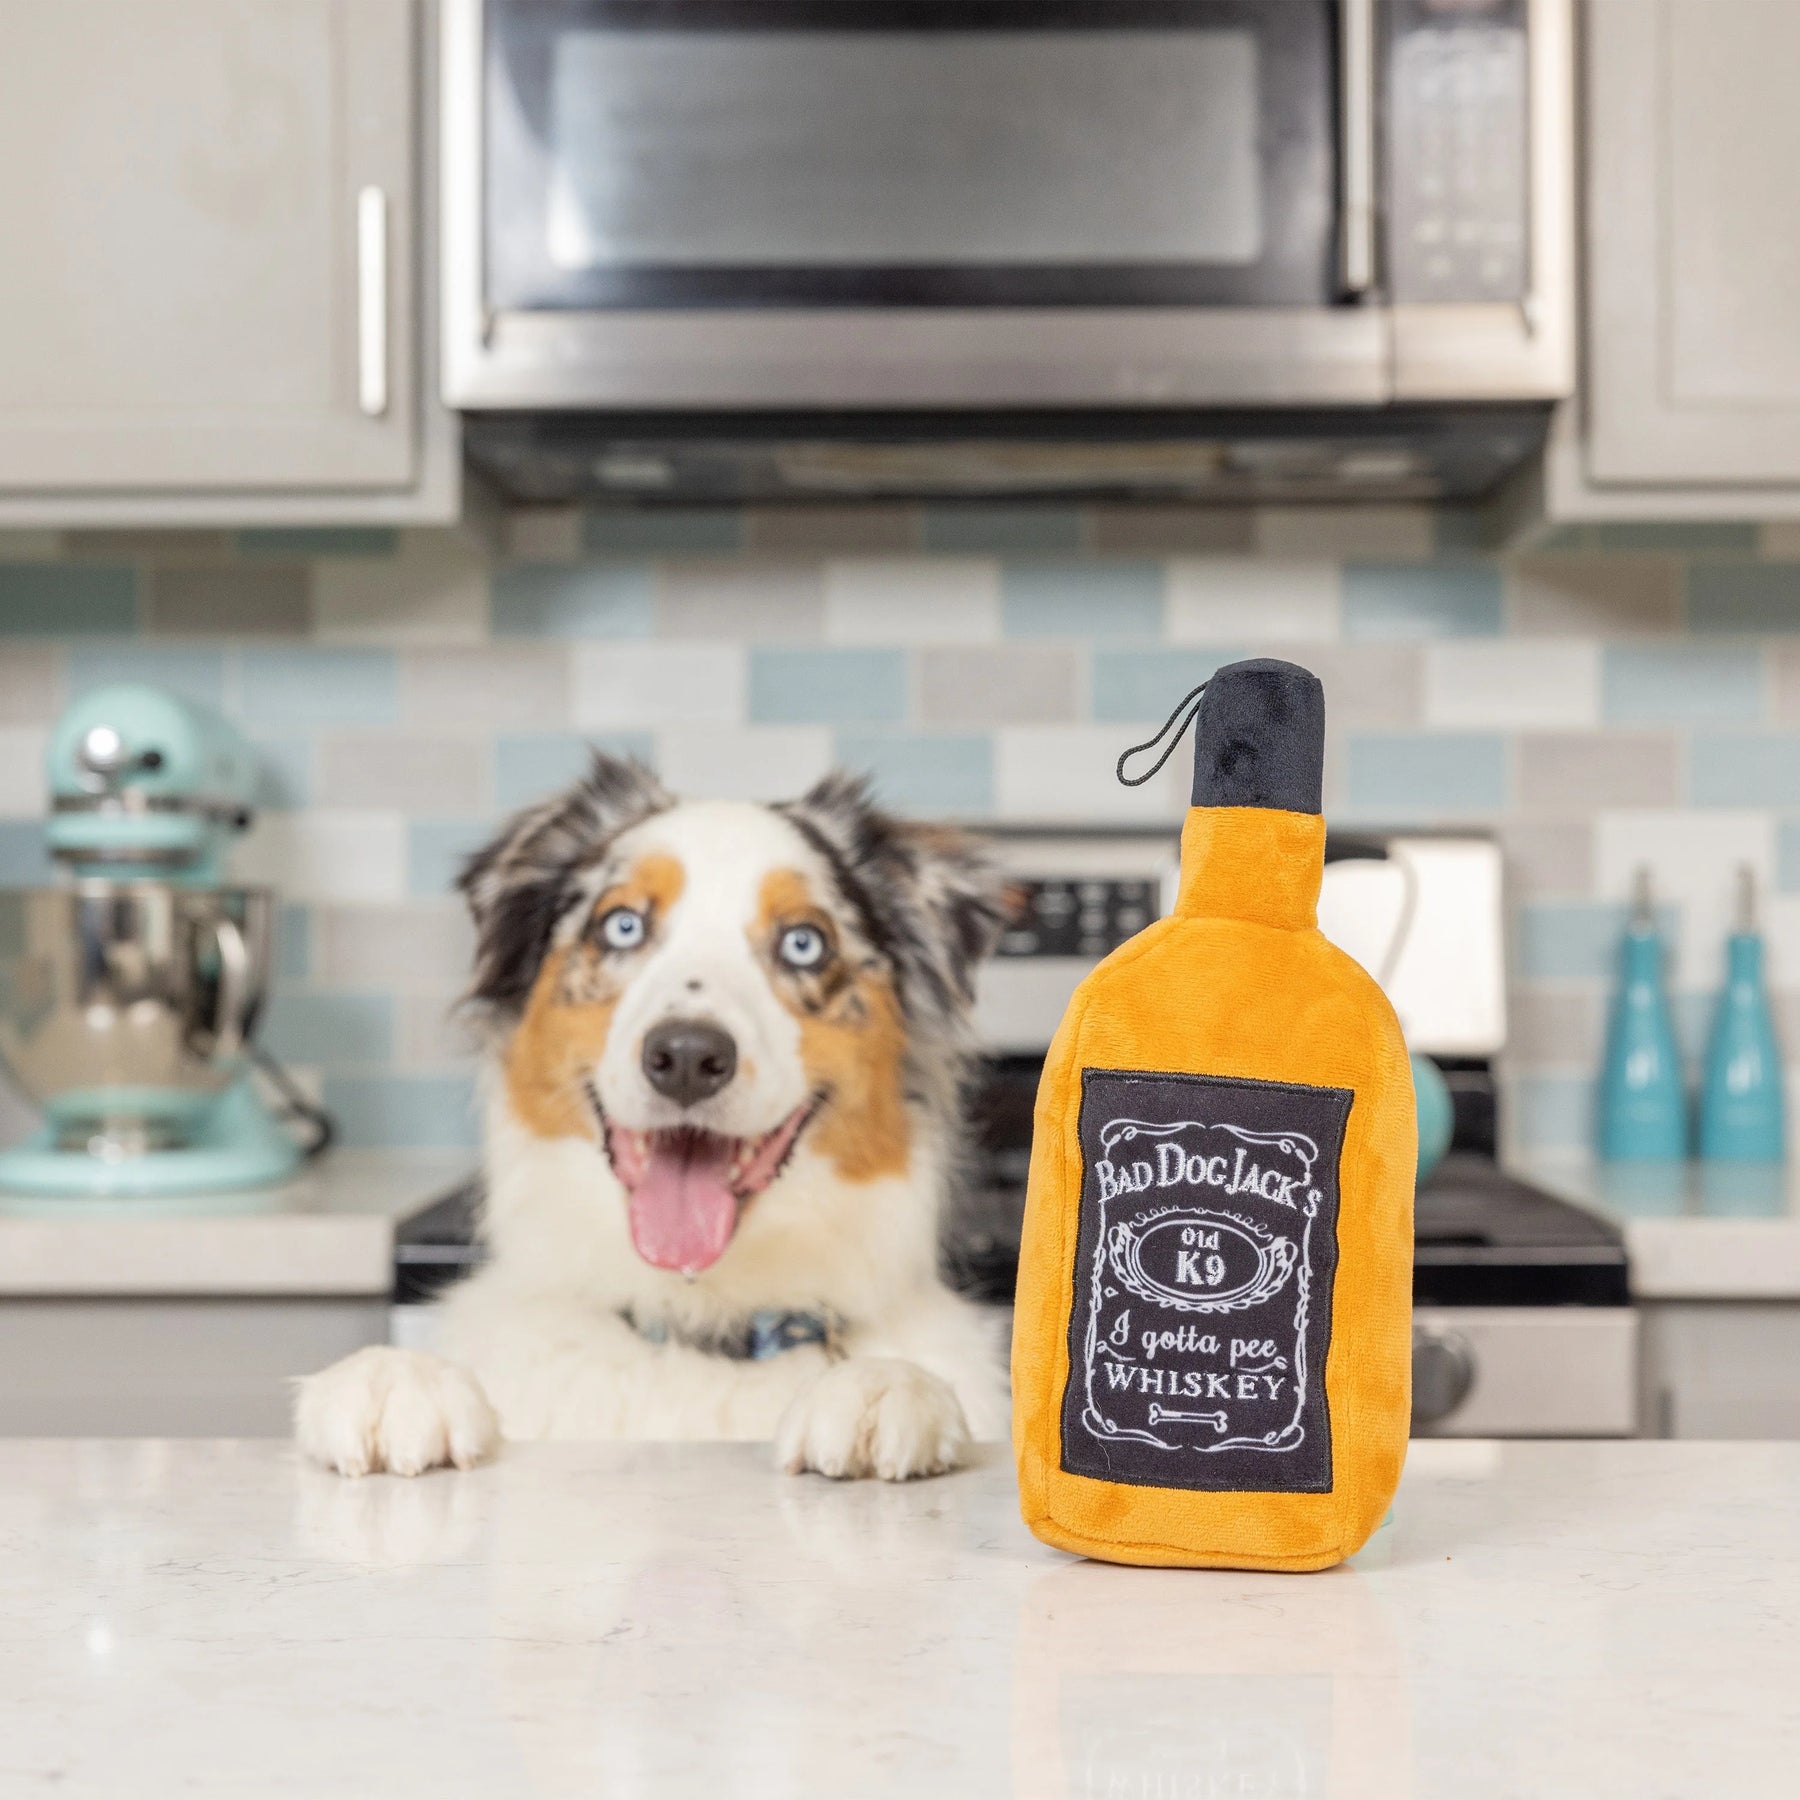 Huxley & Kent - Lulubelles Bad Dog Jack's Whiskey for Dogs